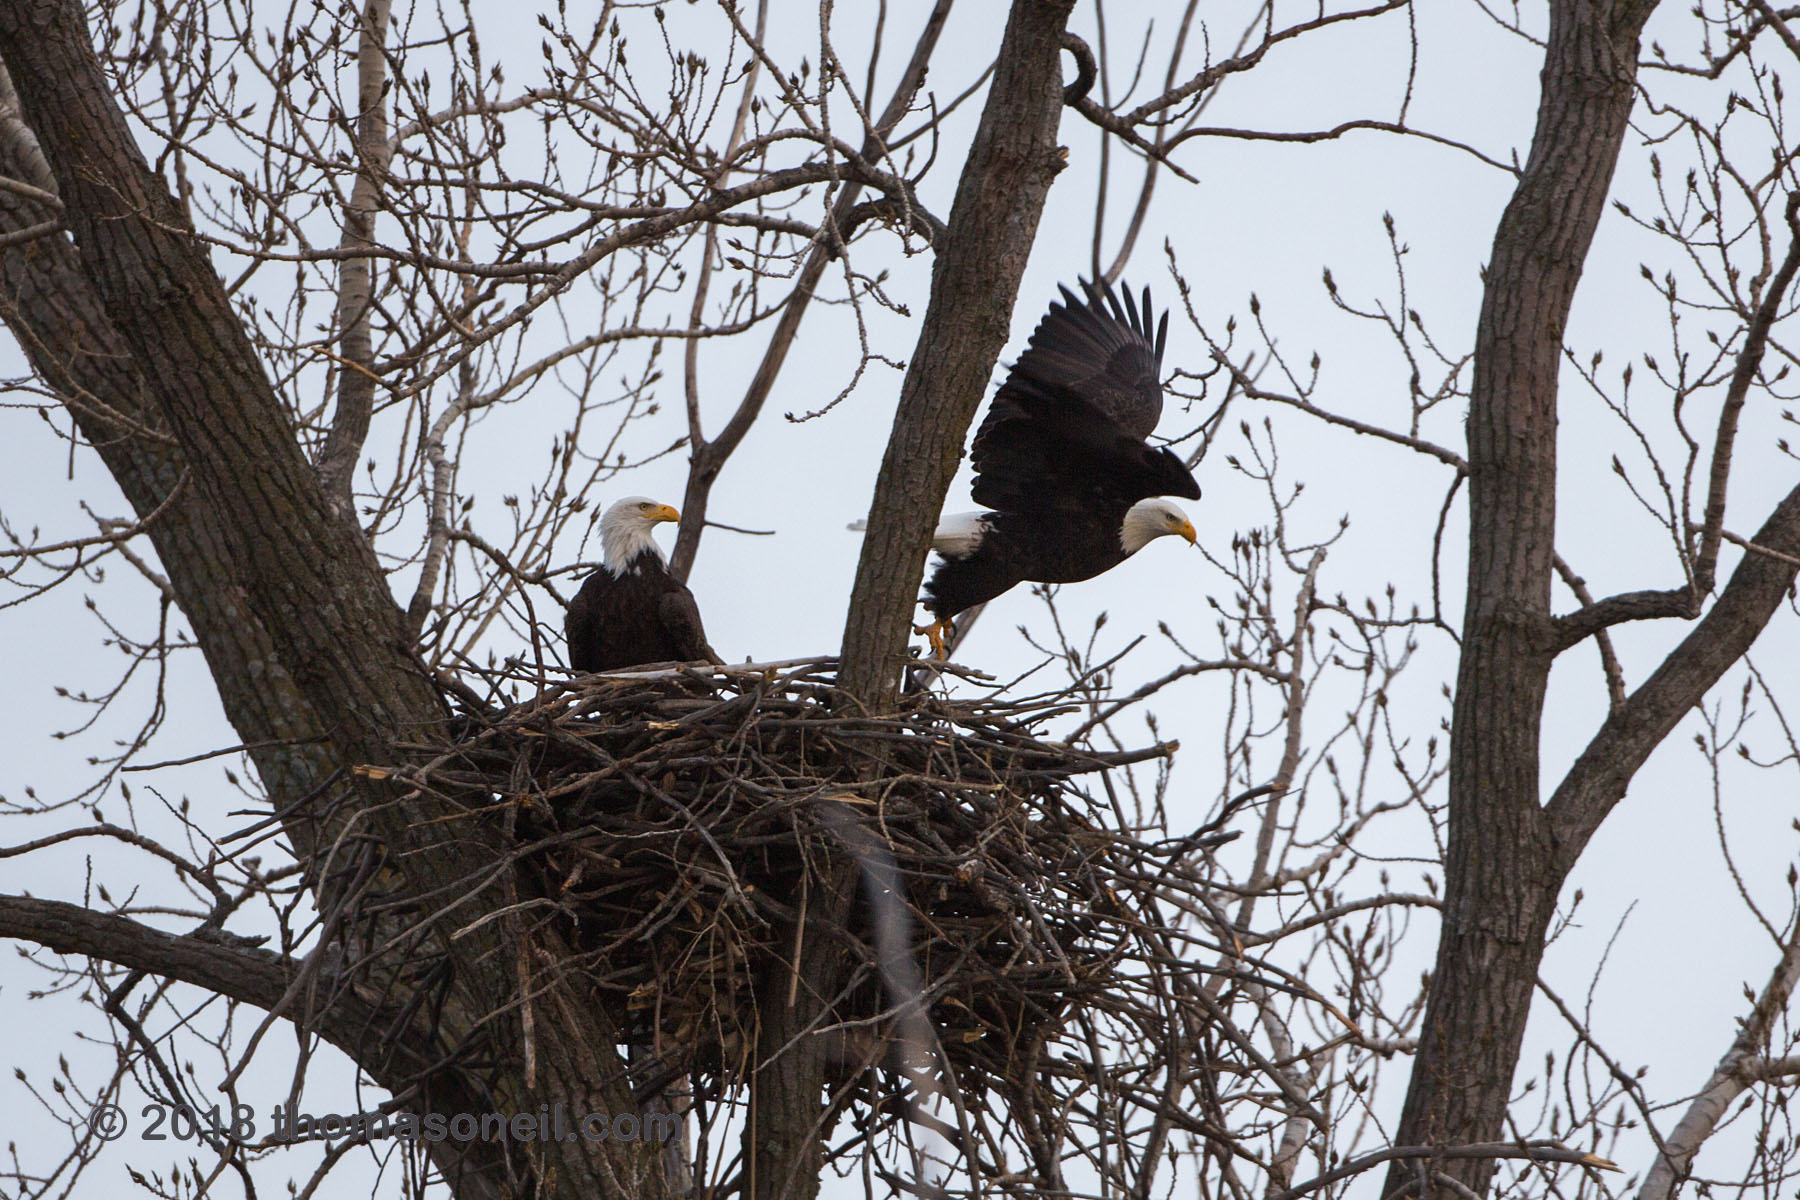 Bald eagle leaving the nest, Loess Bluffs National Wildlife Refuge, Missouri, December 2018.  Click for next photo.